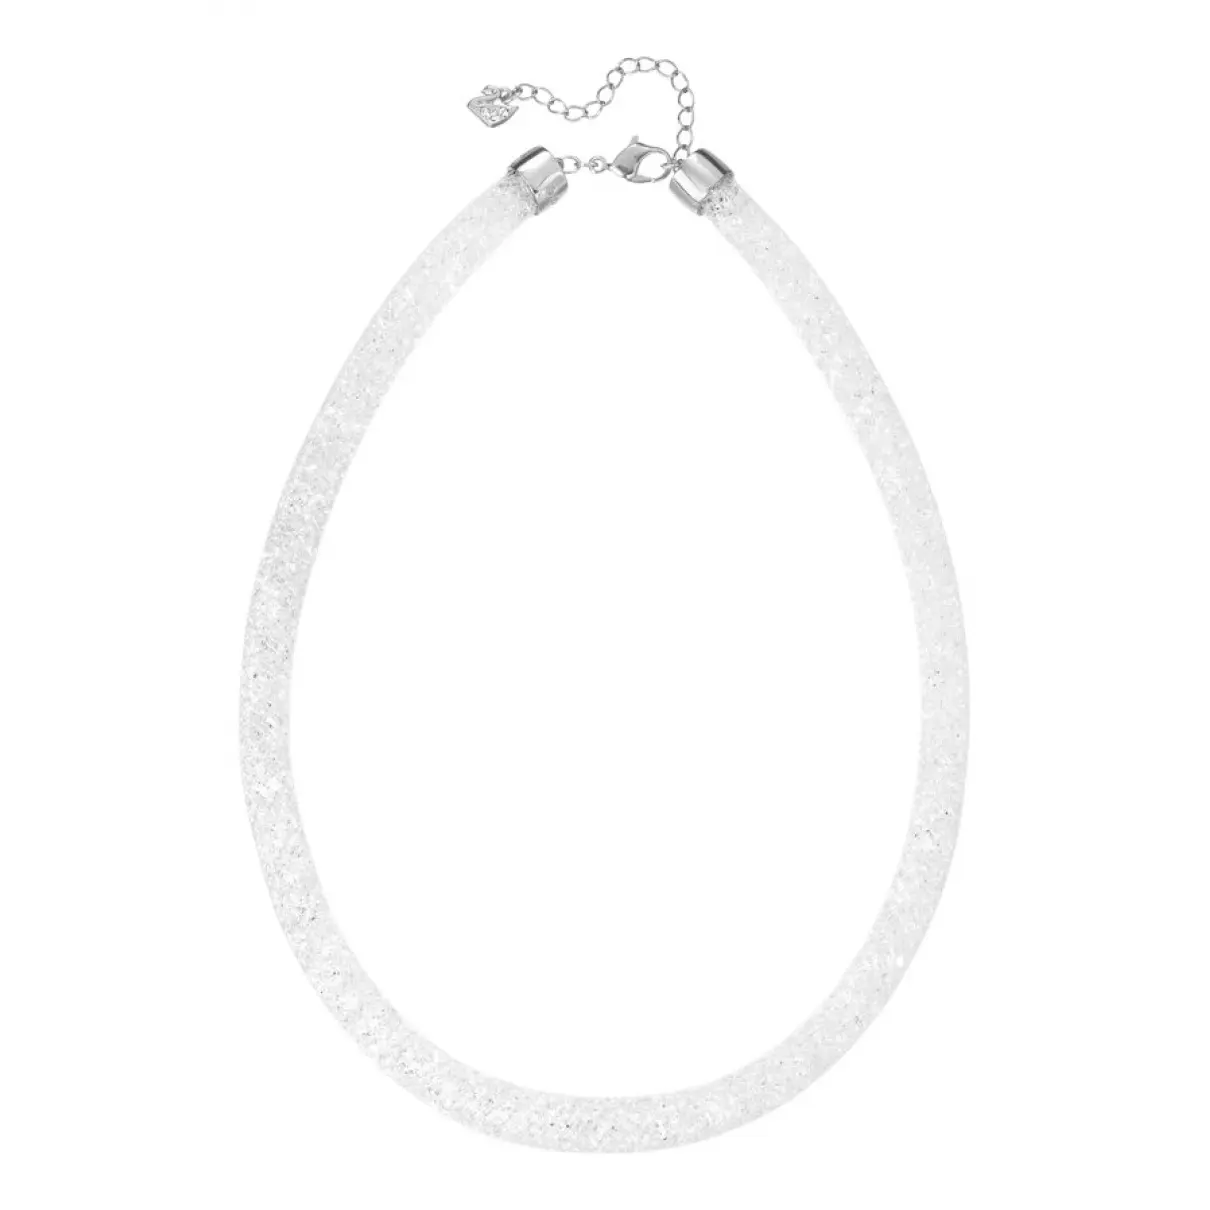 Buy Swarovski Stardust crystal long necklace online